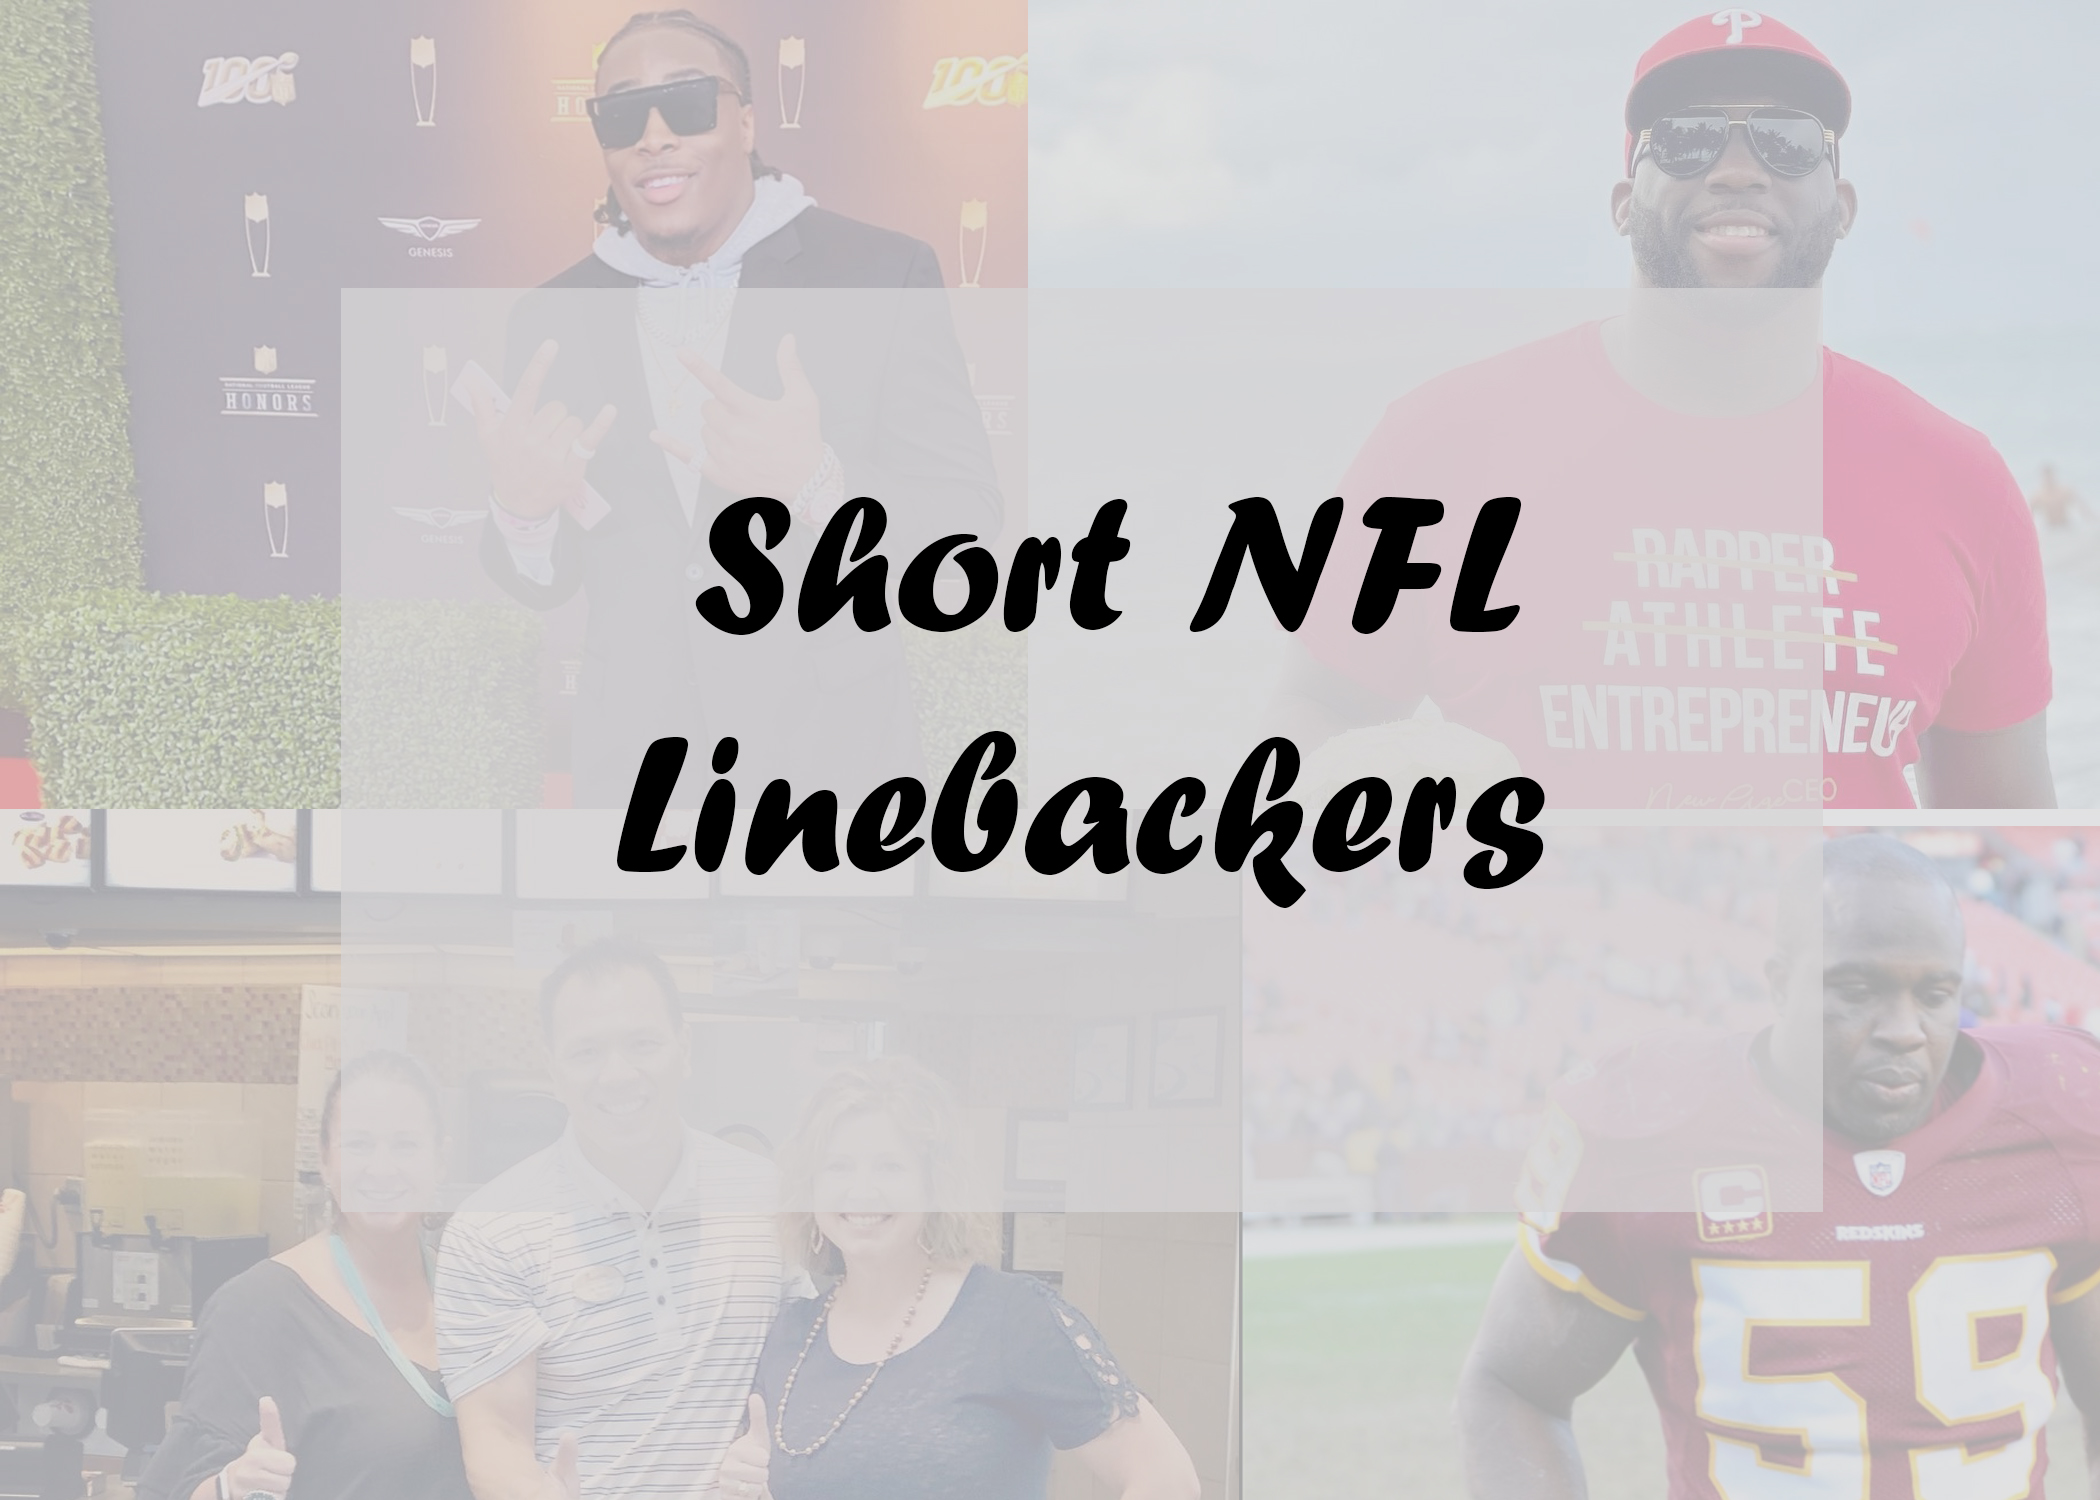 Short NFL Linebackers